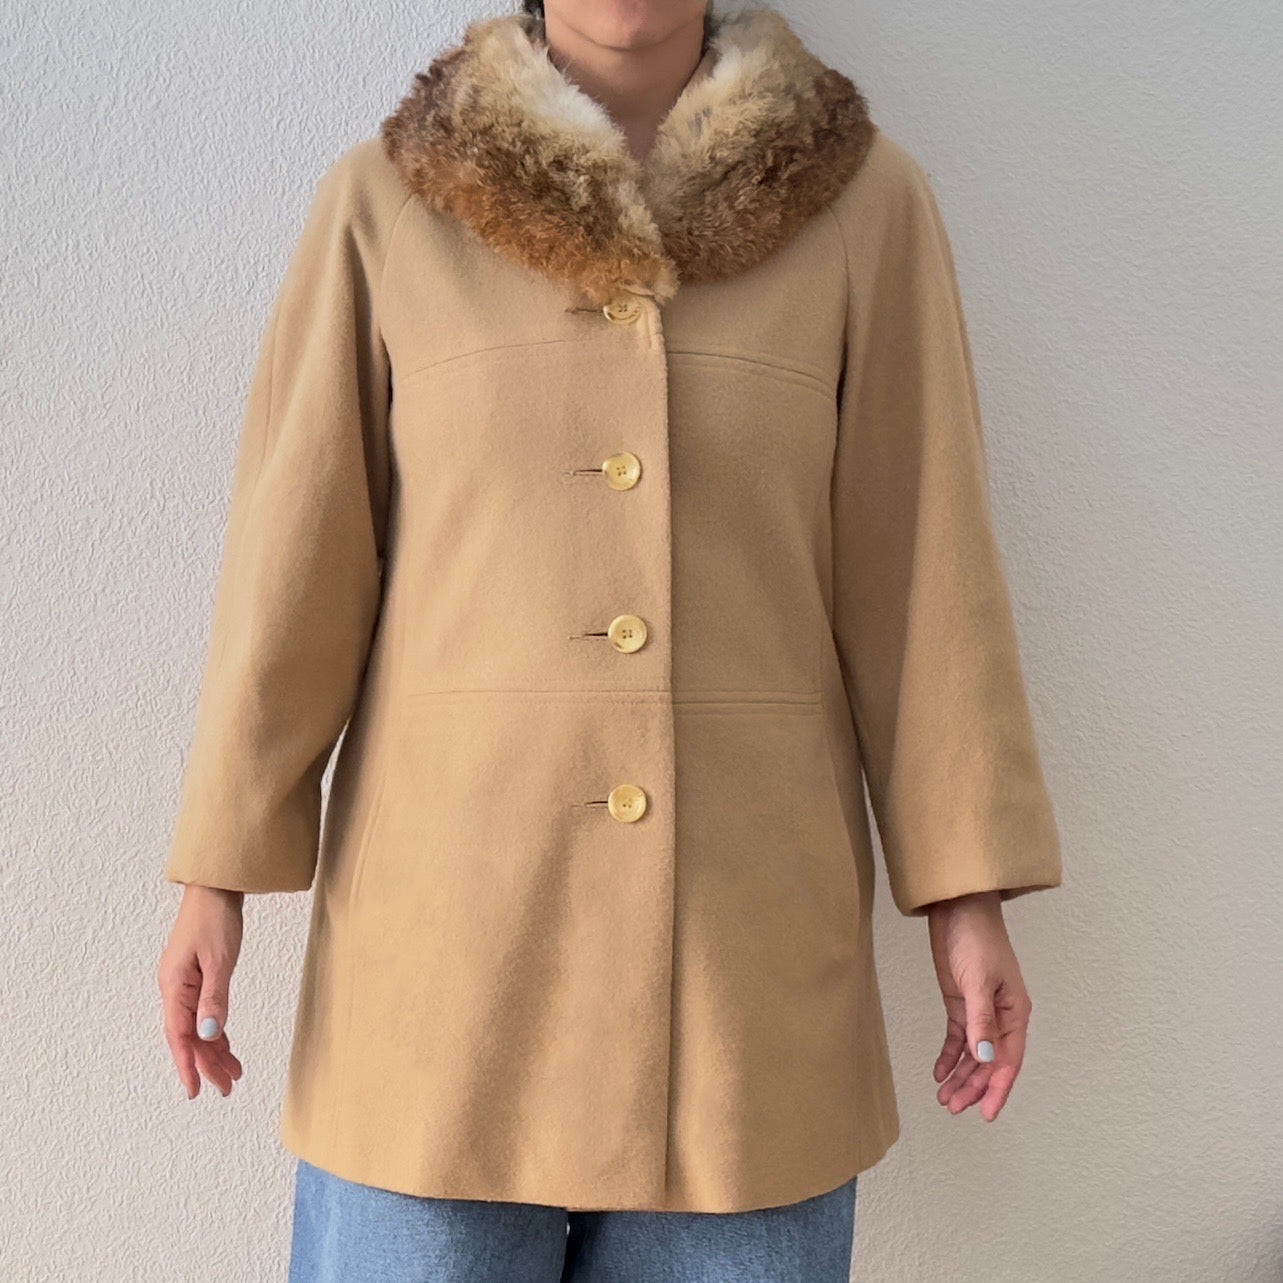 Vintage Fur Collar Short Coat, size S